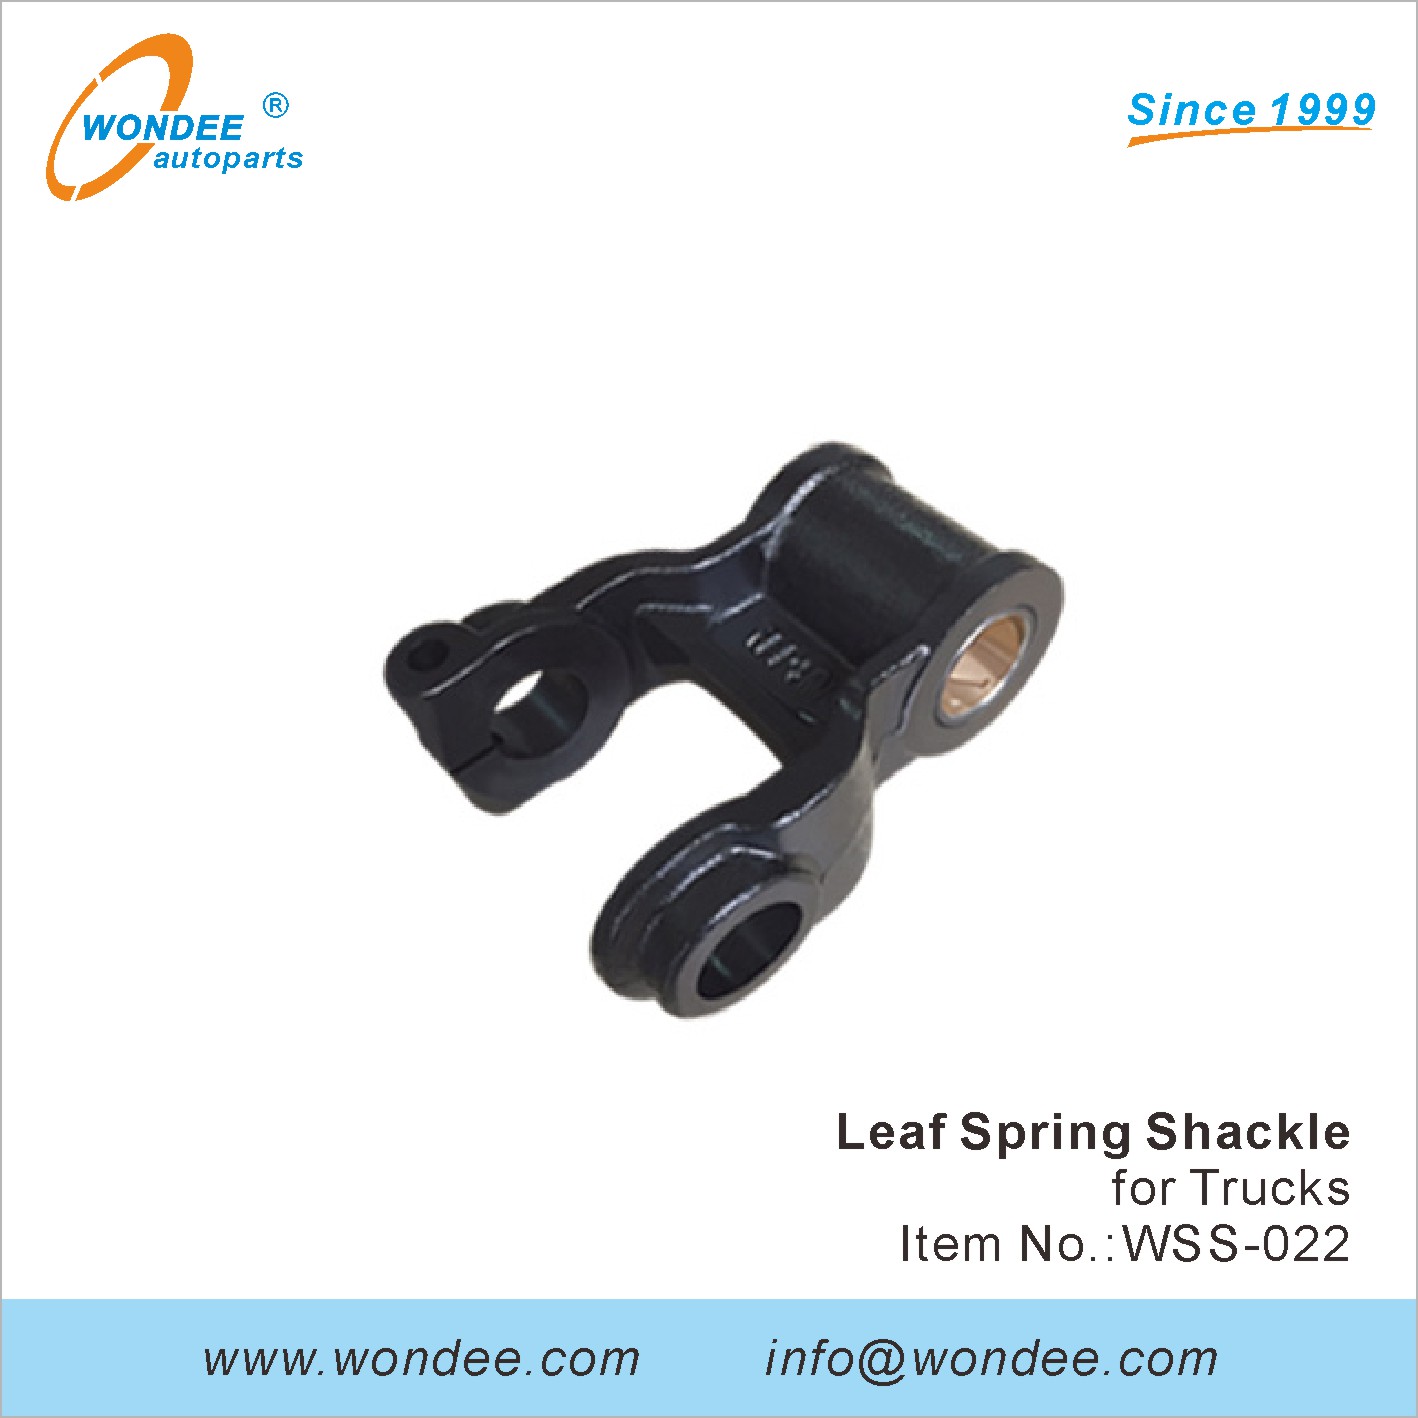 WONDEE leaf spring shackle (22)